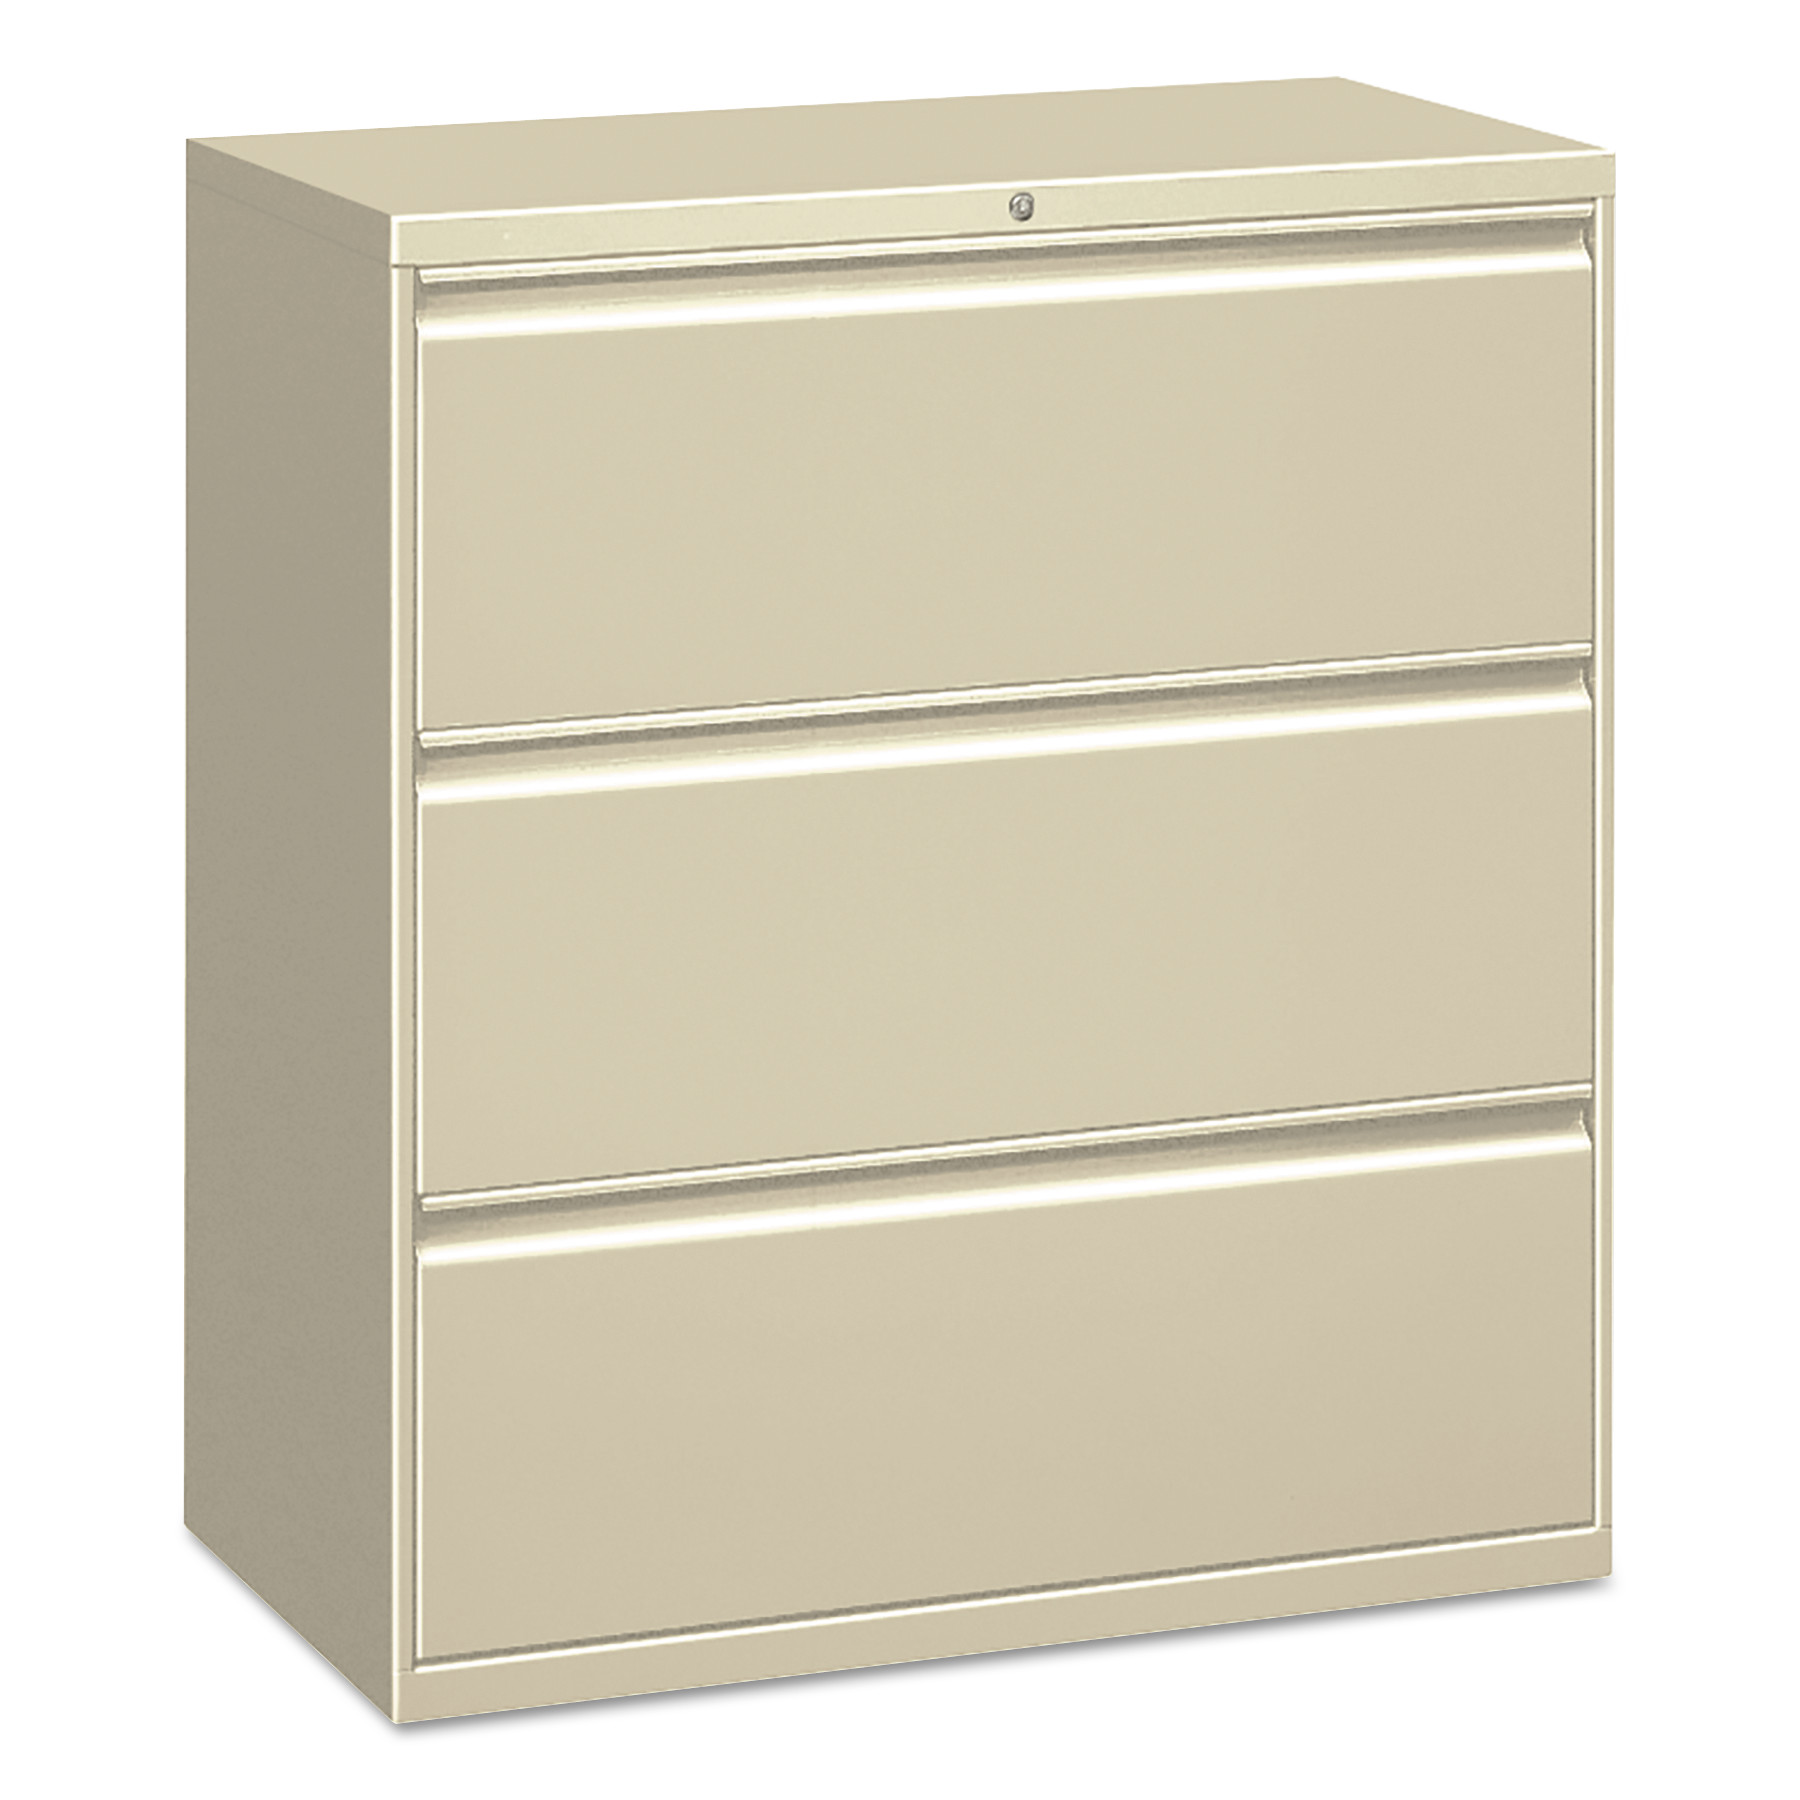  Alera ALELF3041PY Three-Drawer Lateral File Cabinet, 30w x 18d x 39.5h, Putty (ALELF3041PY) 